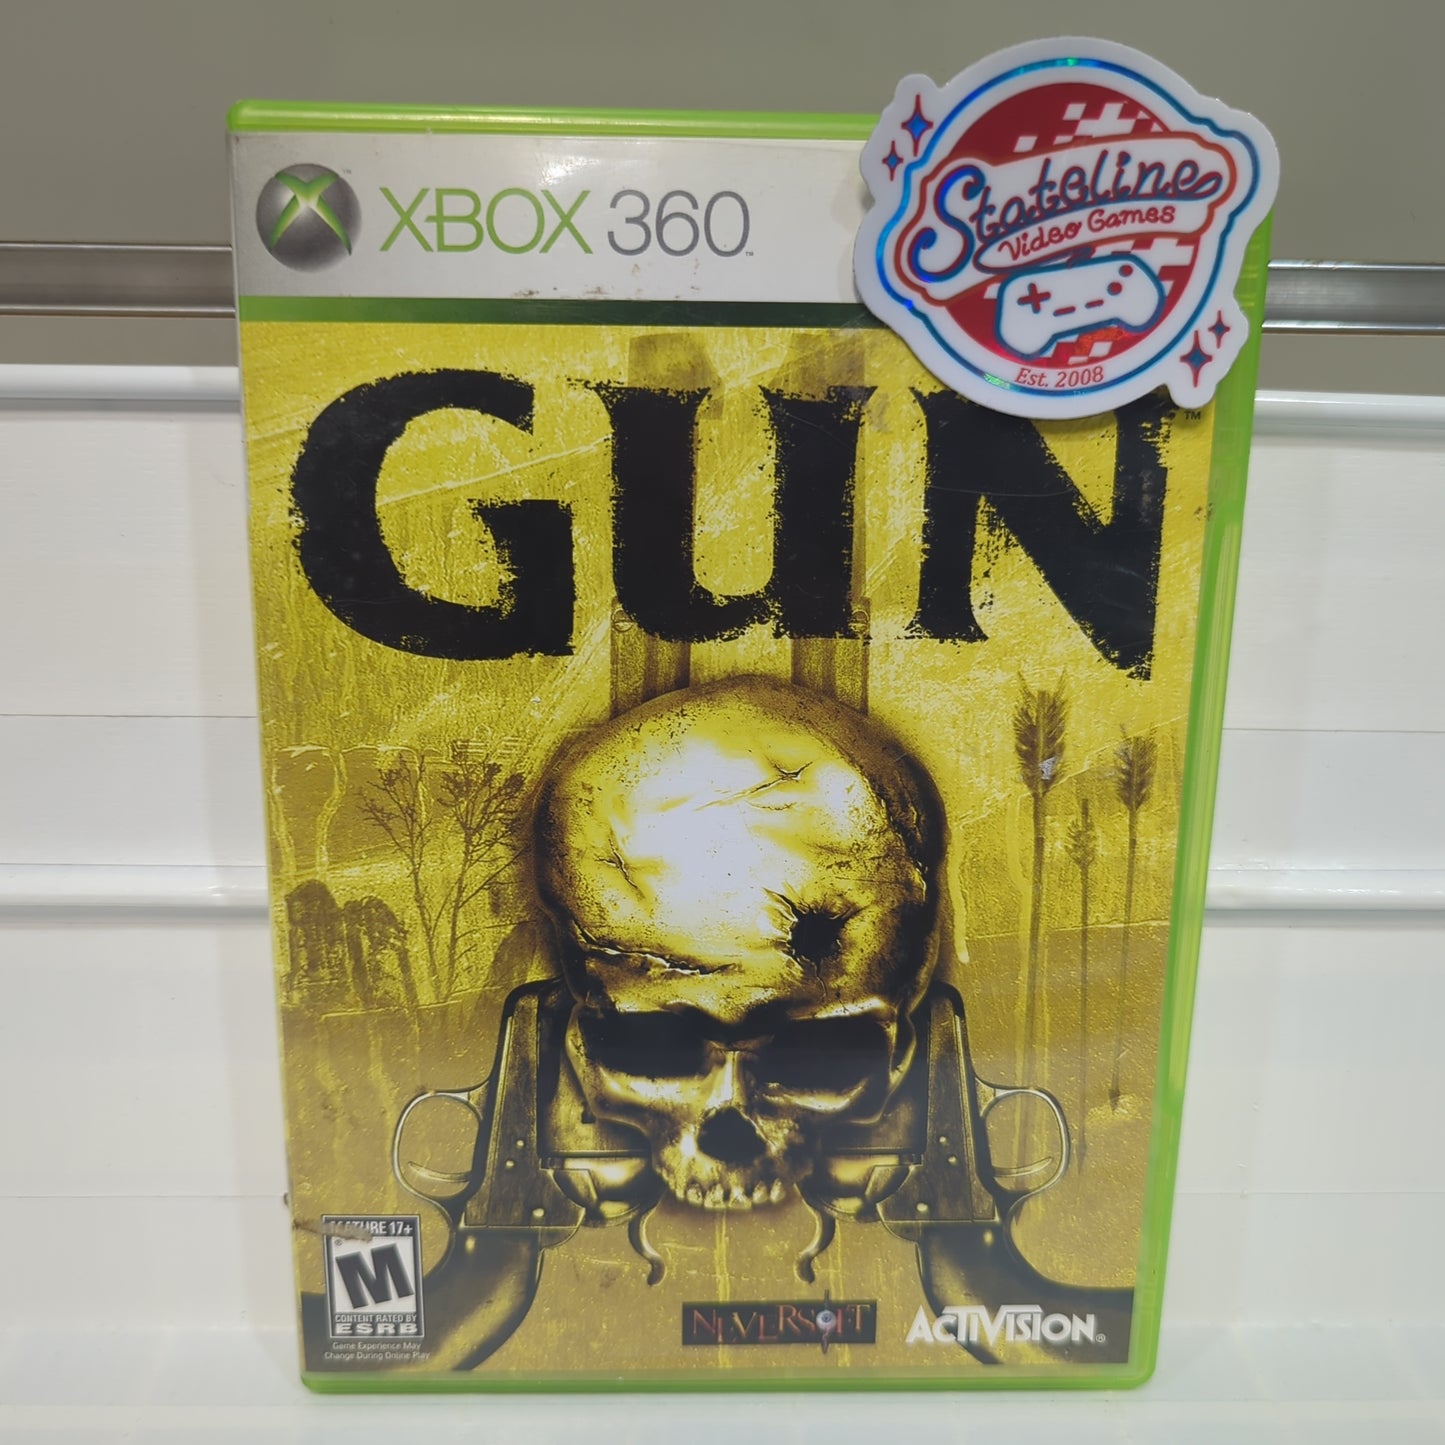 Gun - Xbox 360